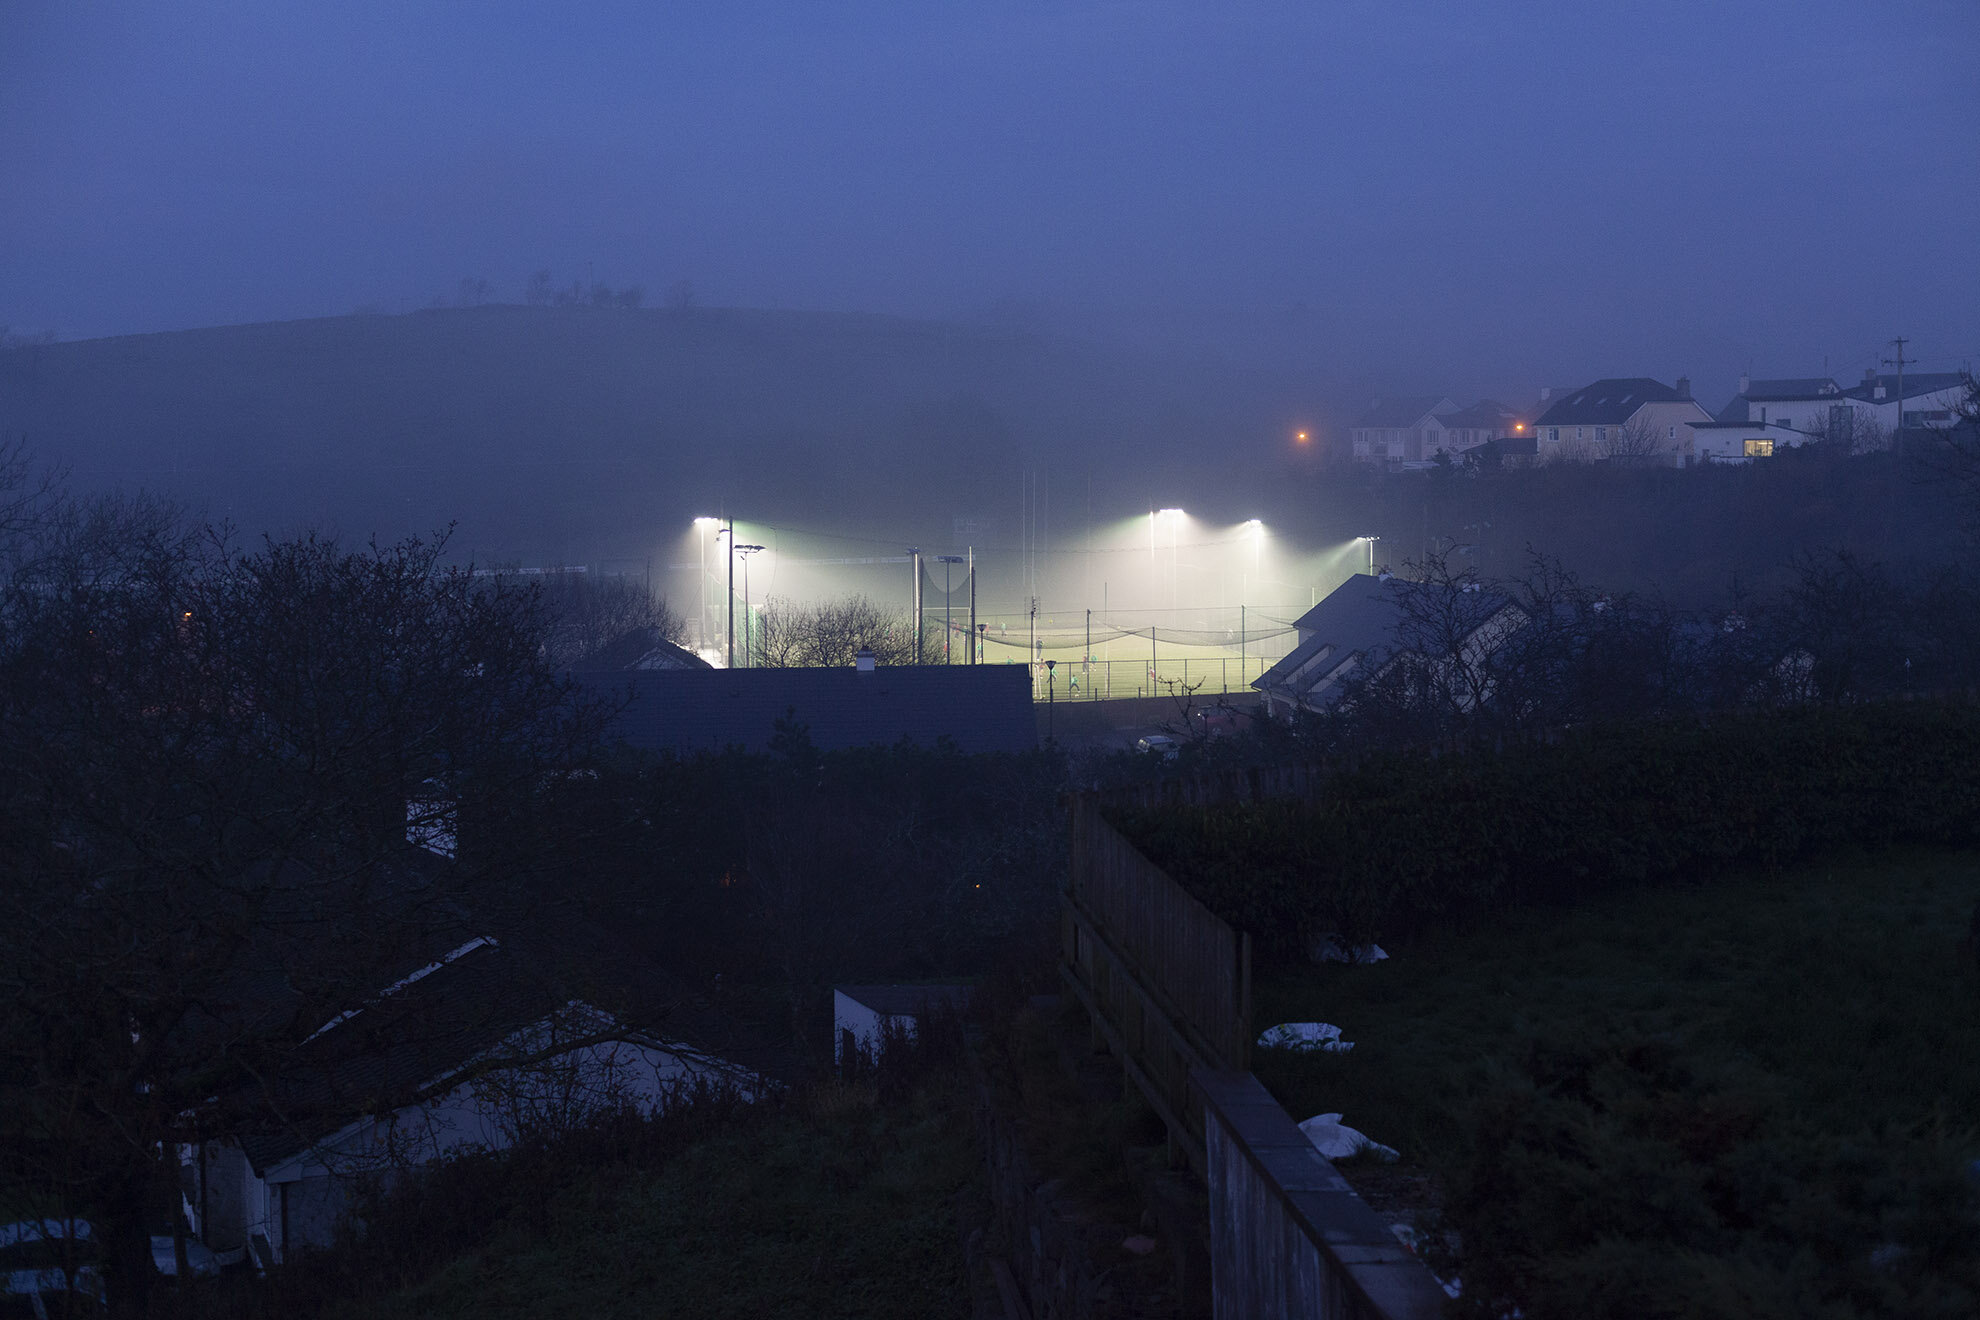  Football pitches, Westport, Ireland 